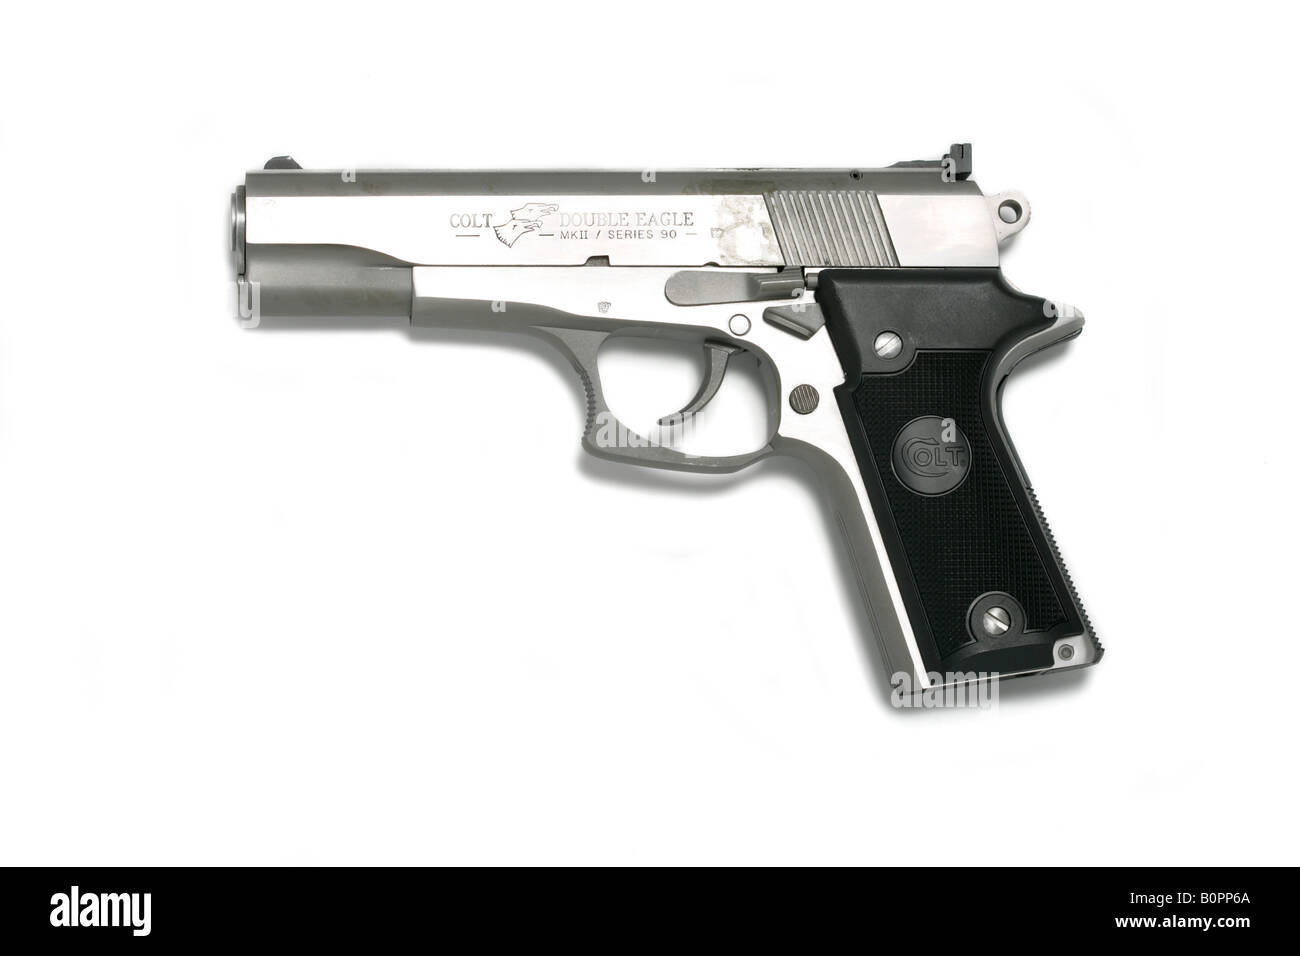 Arme pistolet revolver Colt double eagle MK II série 90 Photo Stock - Alamy